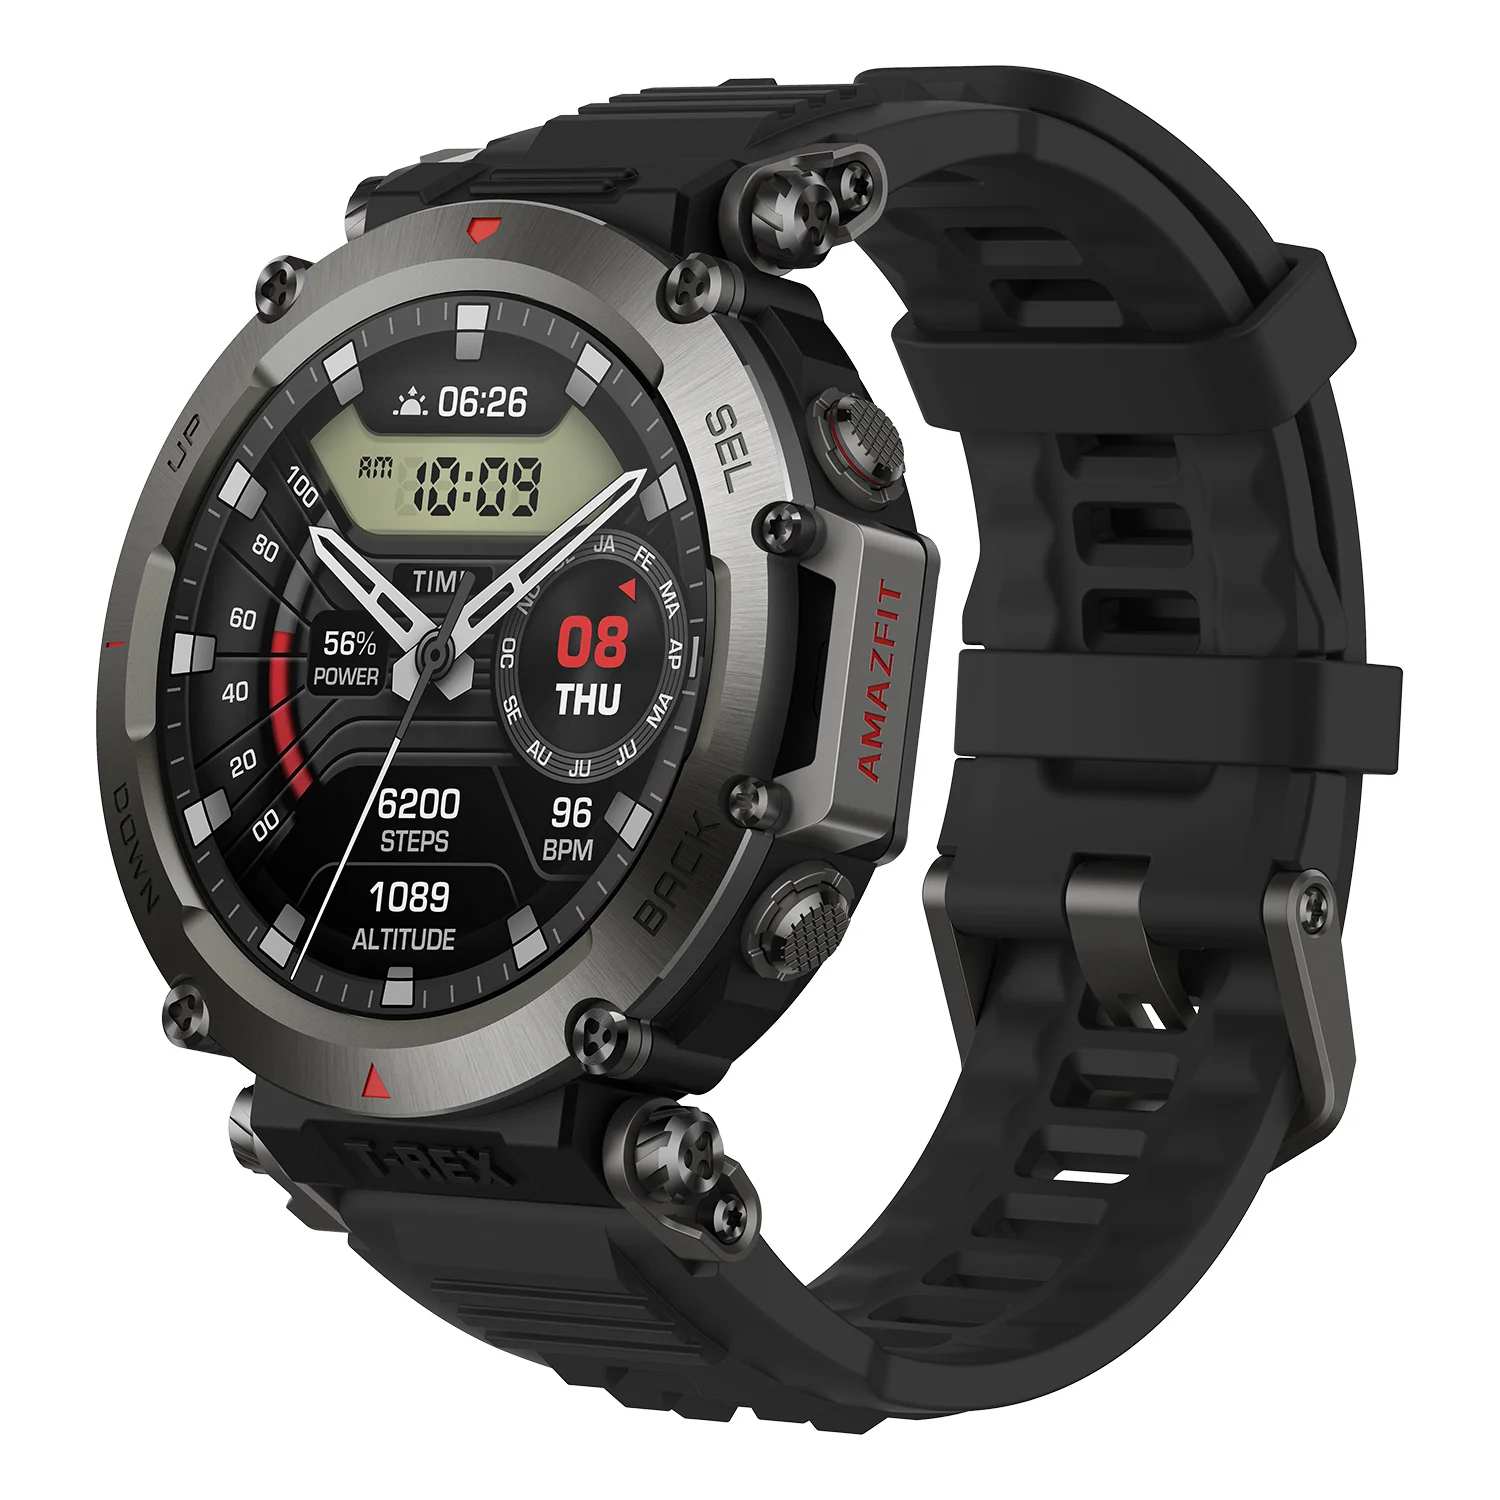 Amazfit T-Rex Ultra Smart Watch Aliexpress Coupon Promo Code